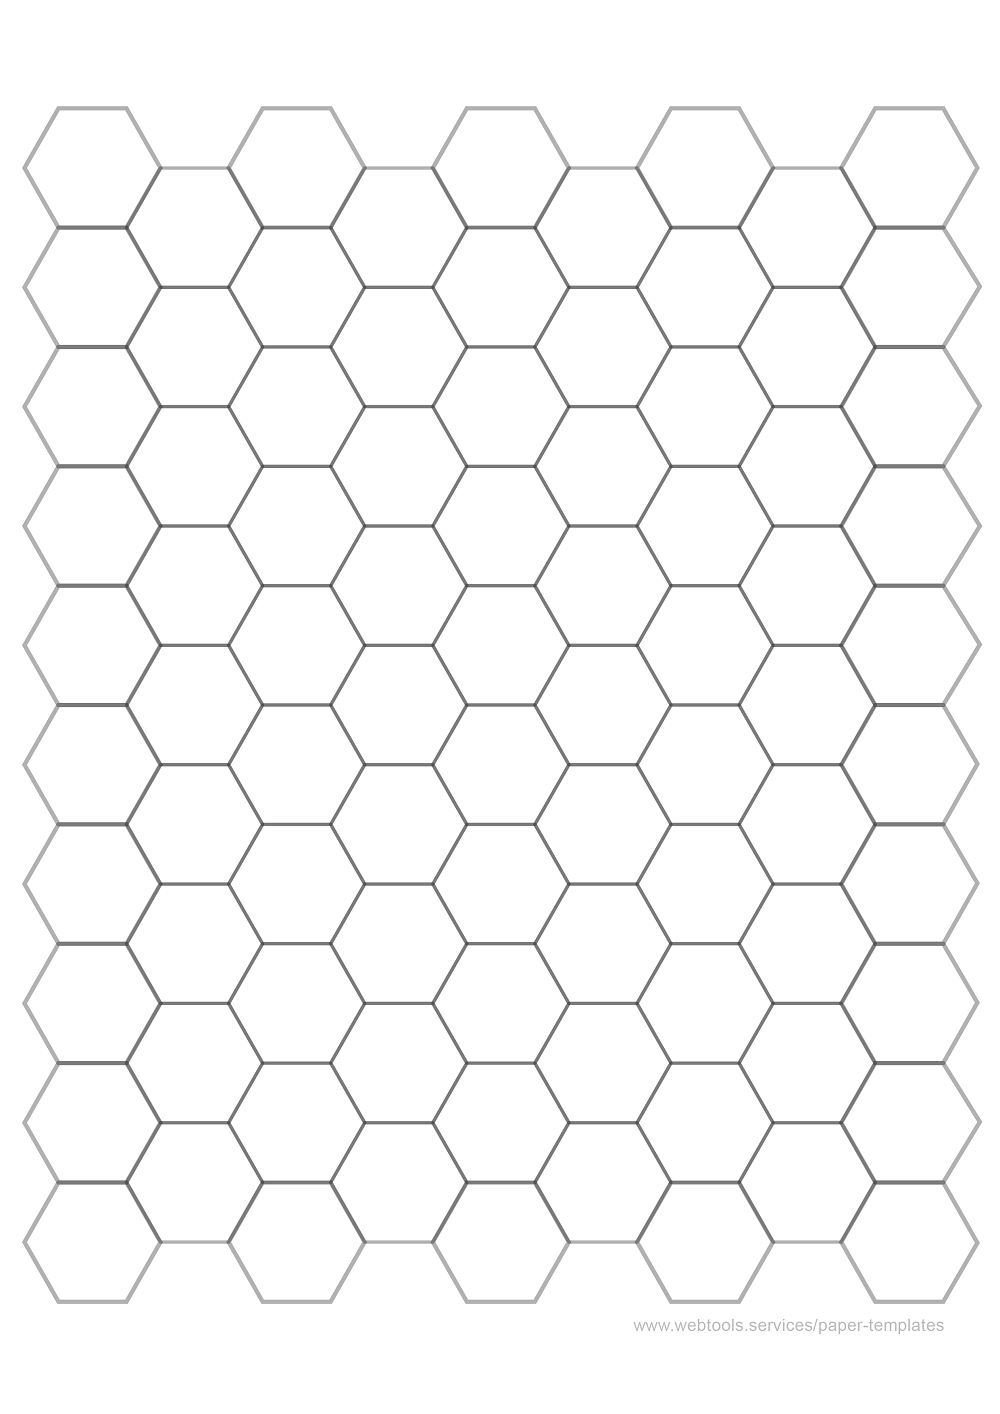 Hexagonal Grid Paper